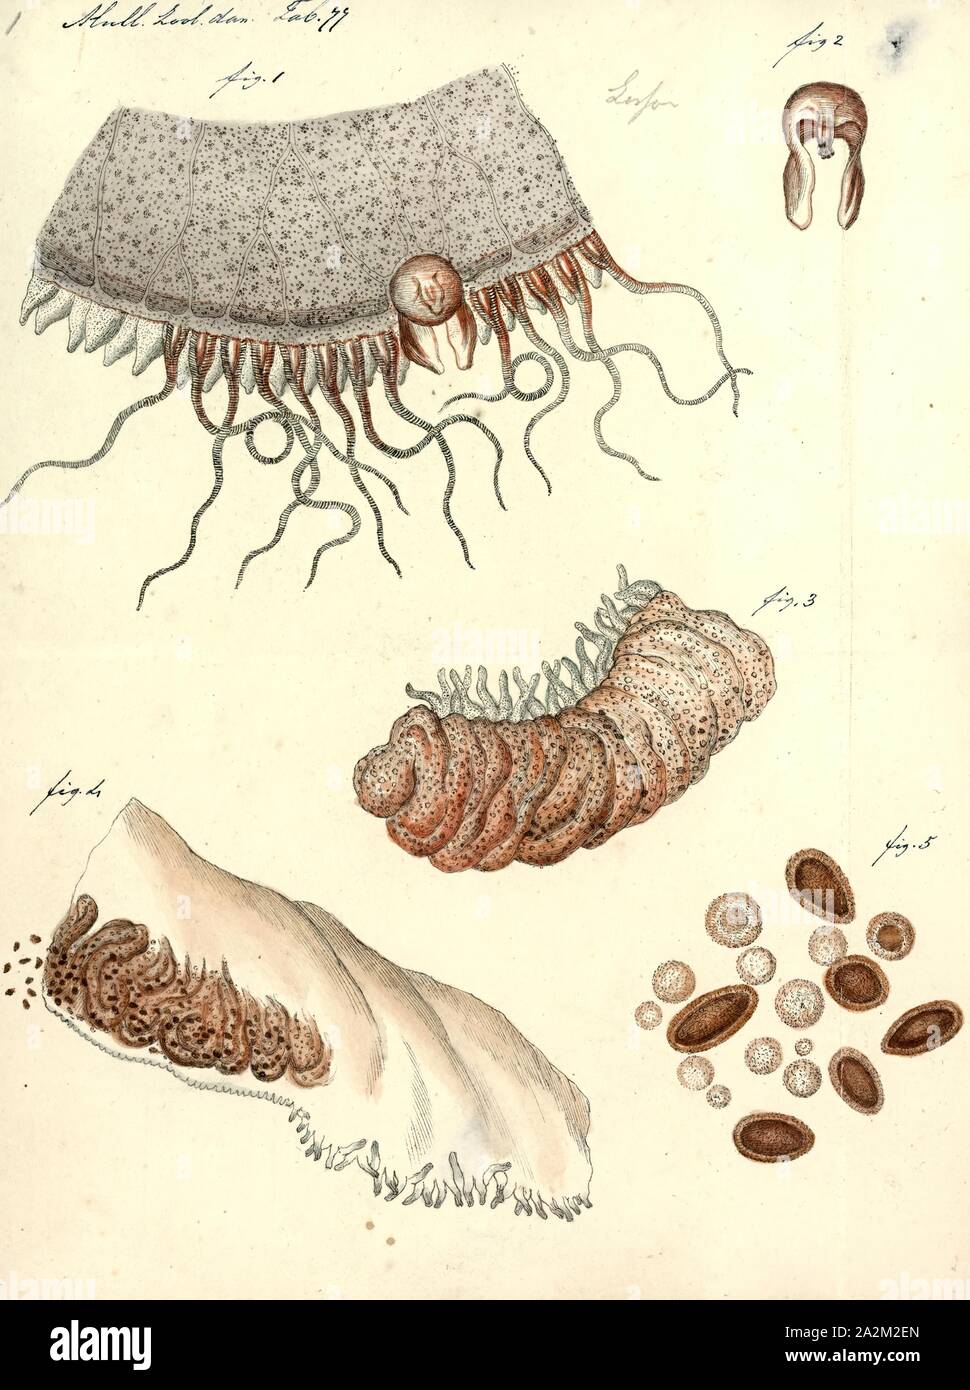 Aurelia aurita, Print, Aurelia aurita (also called the common jellyfish,  moon jellyfish, moon jelly or saucer jelly) is a widely studied species of  the genus Aurelia. All species in the genus are